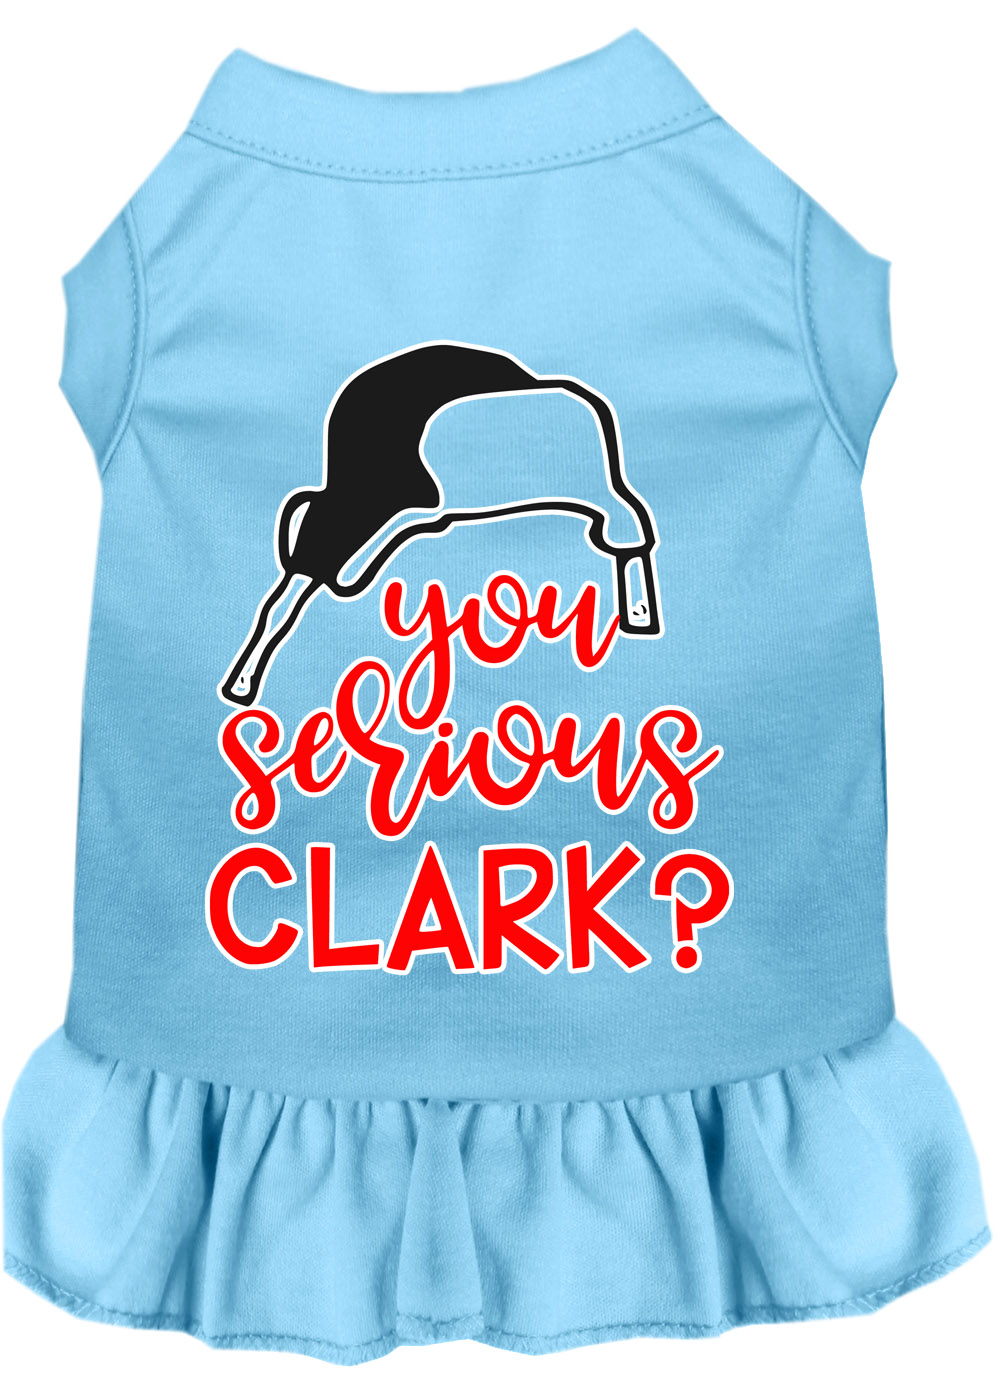 You Serious Clark? Screen Print Dog Dress Baby Blue XS